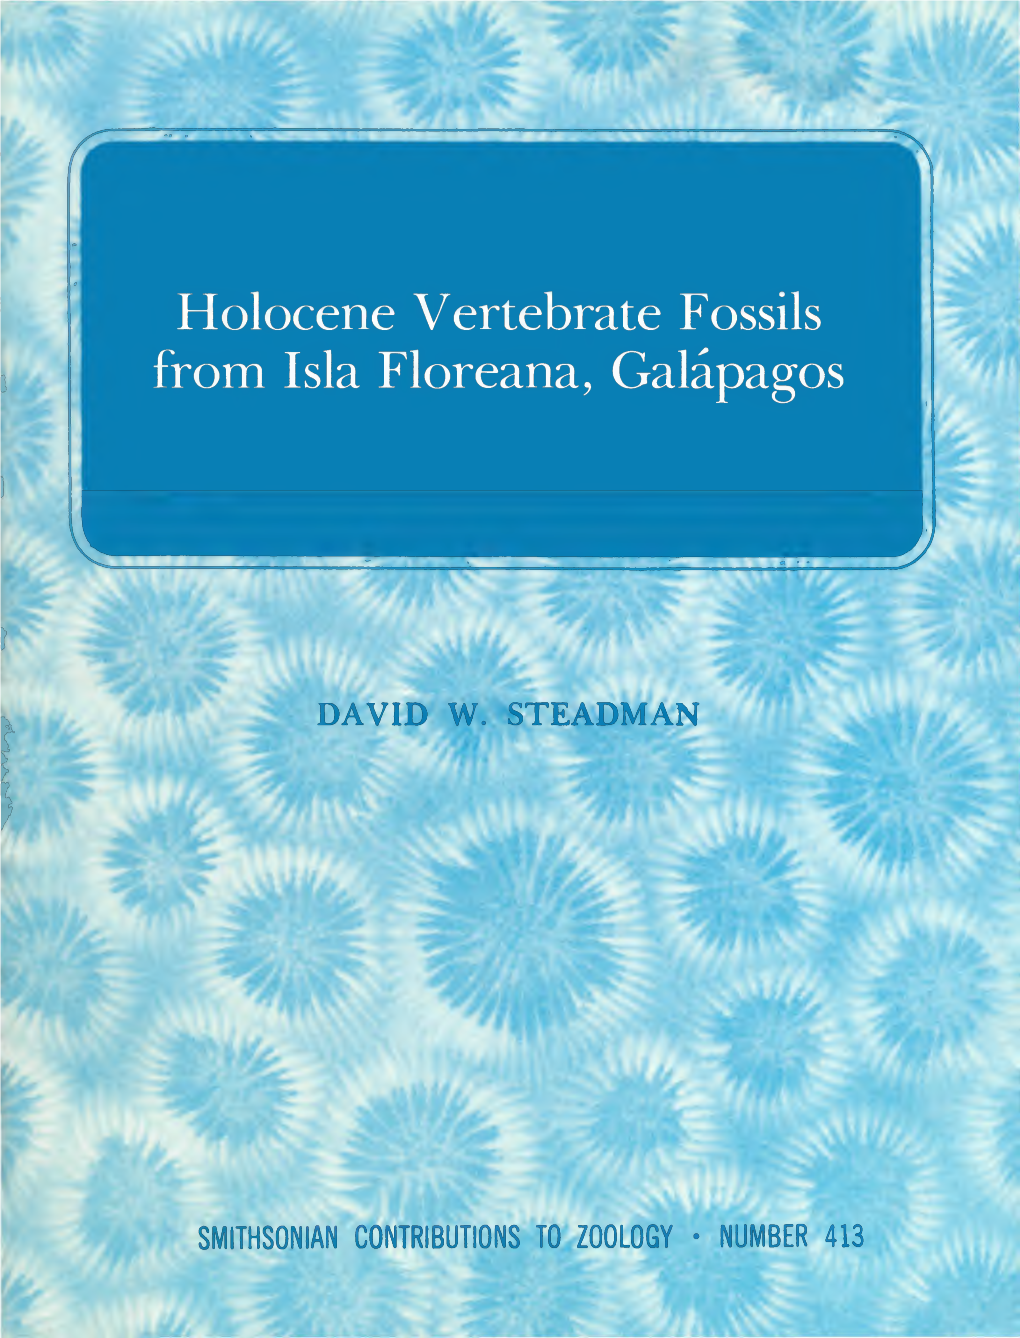 Holocene Vertebrate Fossils from Isla Floreana, Galapagos